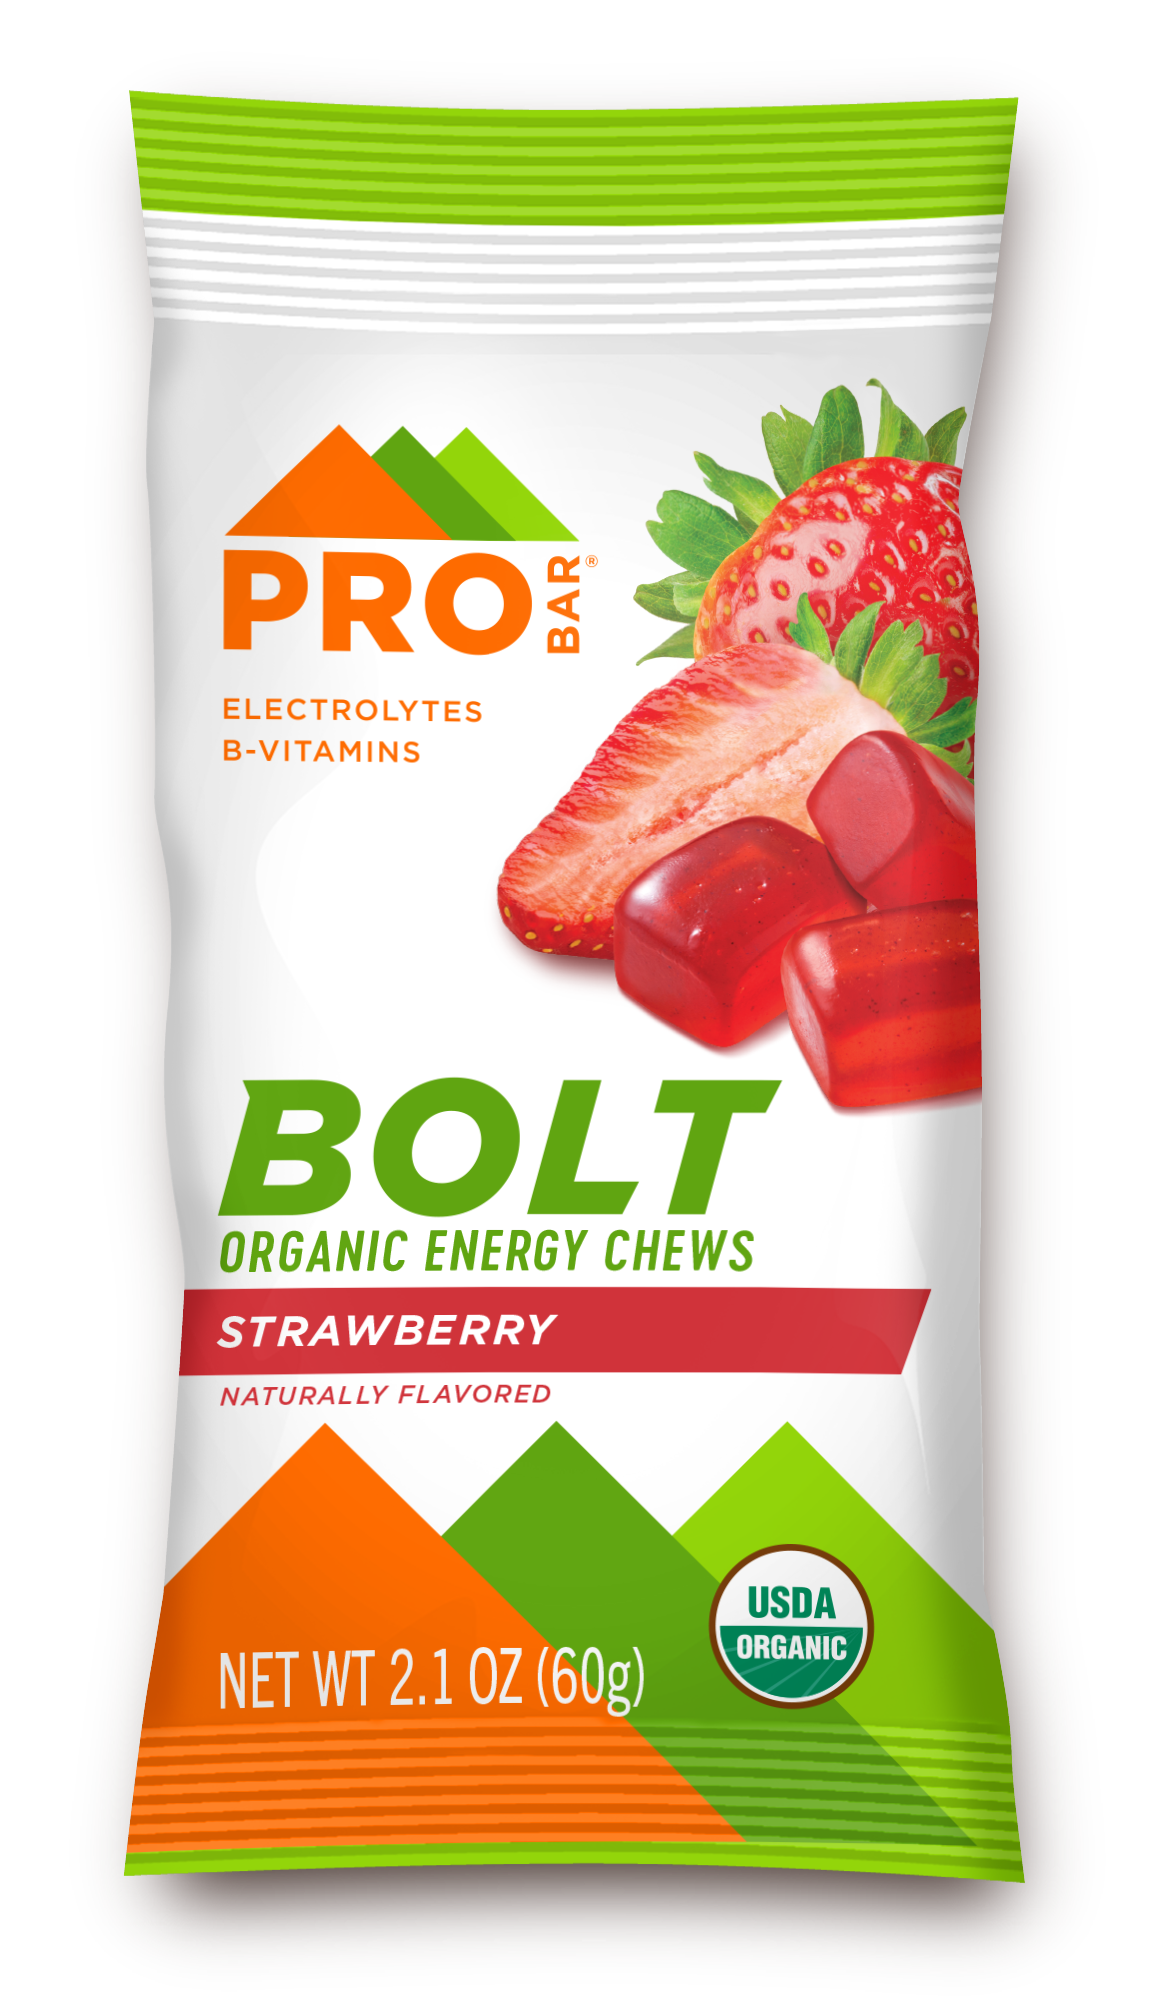 ProBar Strawberry Bolt Organic Energy Chews 12 innerpacks per case 2.1 oz